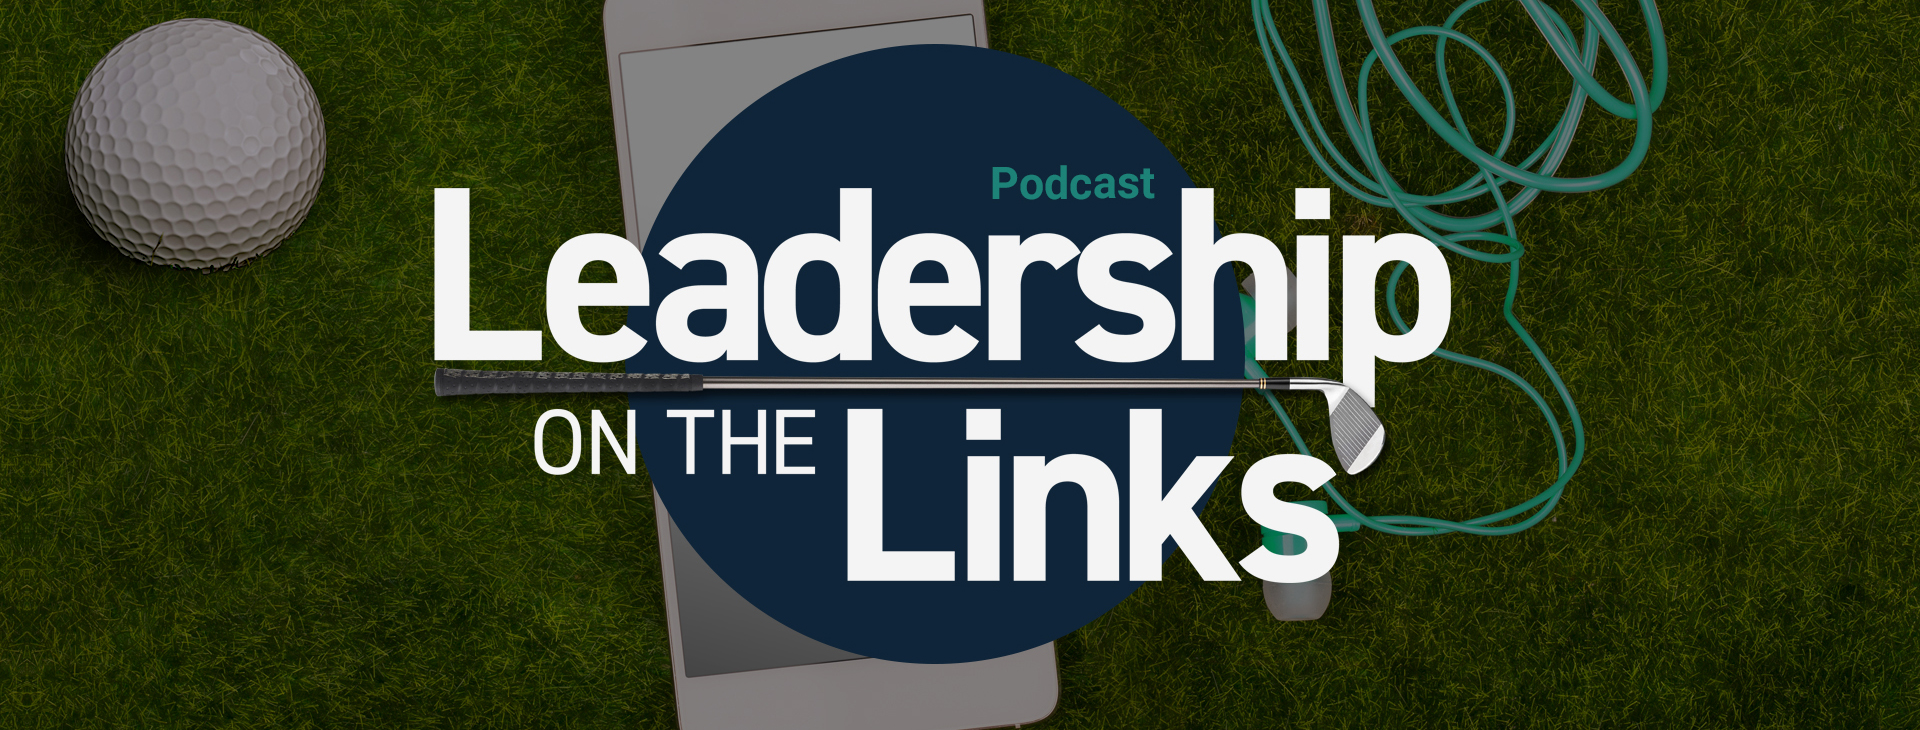 Leadership on the Links podcast logo